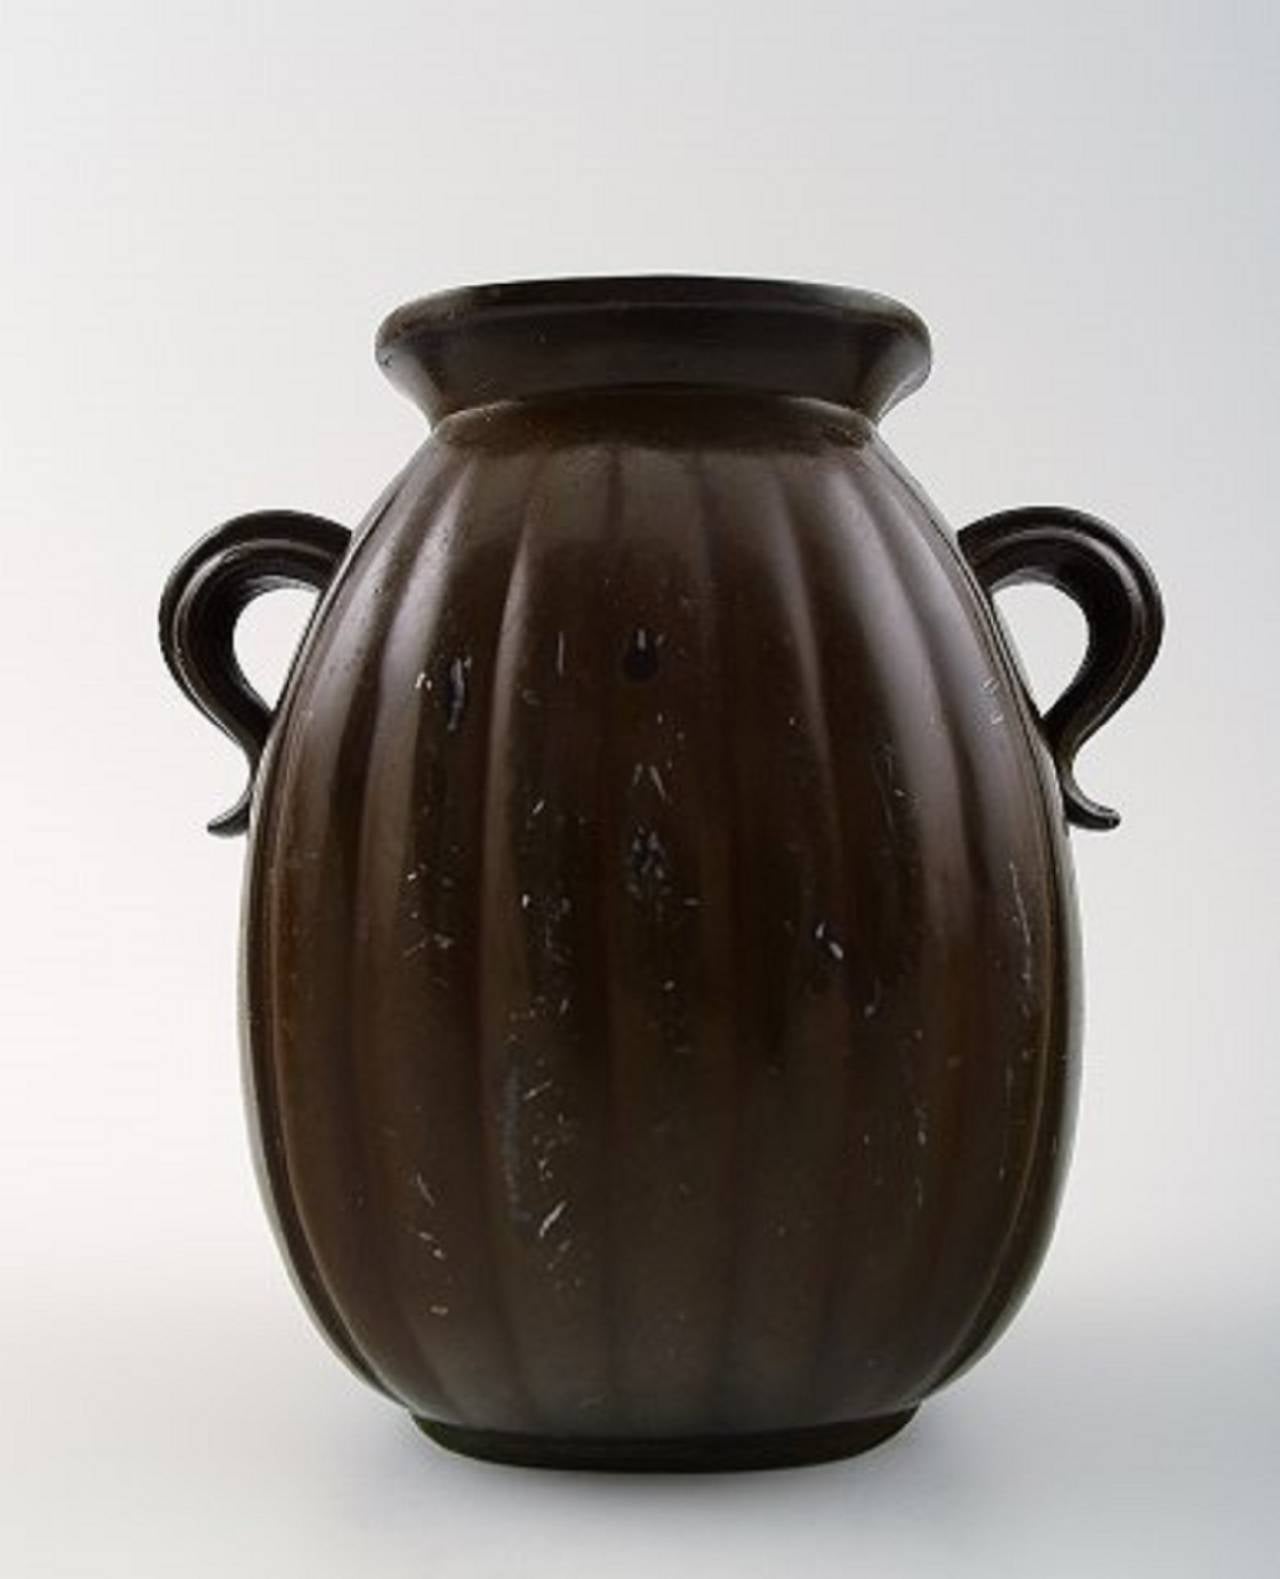 Just Andersen Art Deco metal vase, number D133.
1930s.
Marked. Good condition, some wear.
Measures: 9.5 x 9 cm.